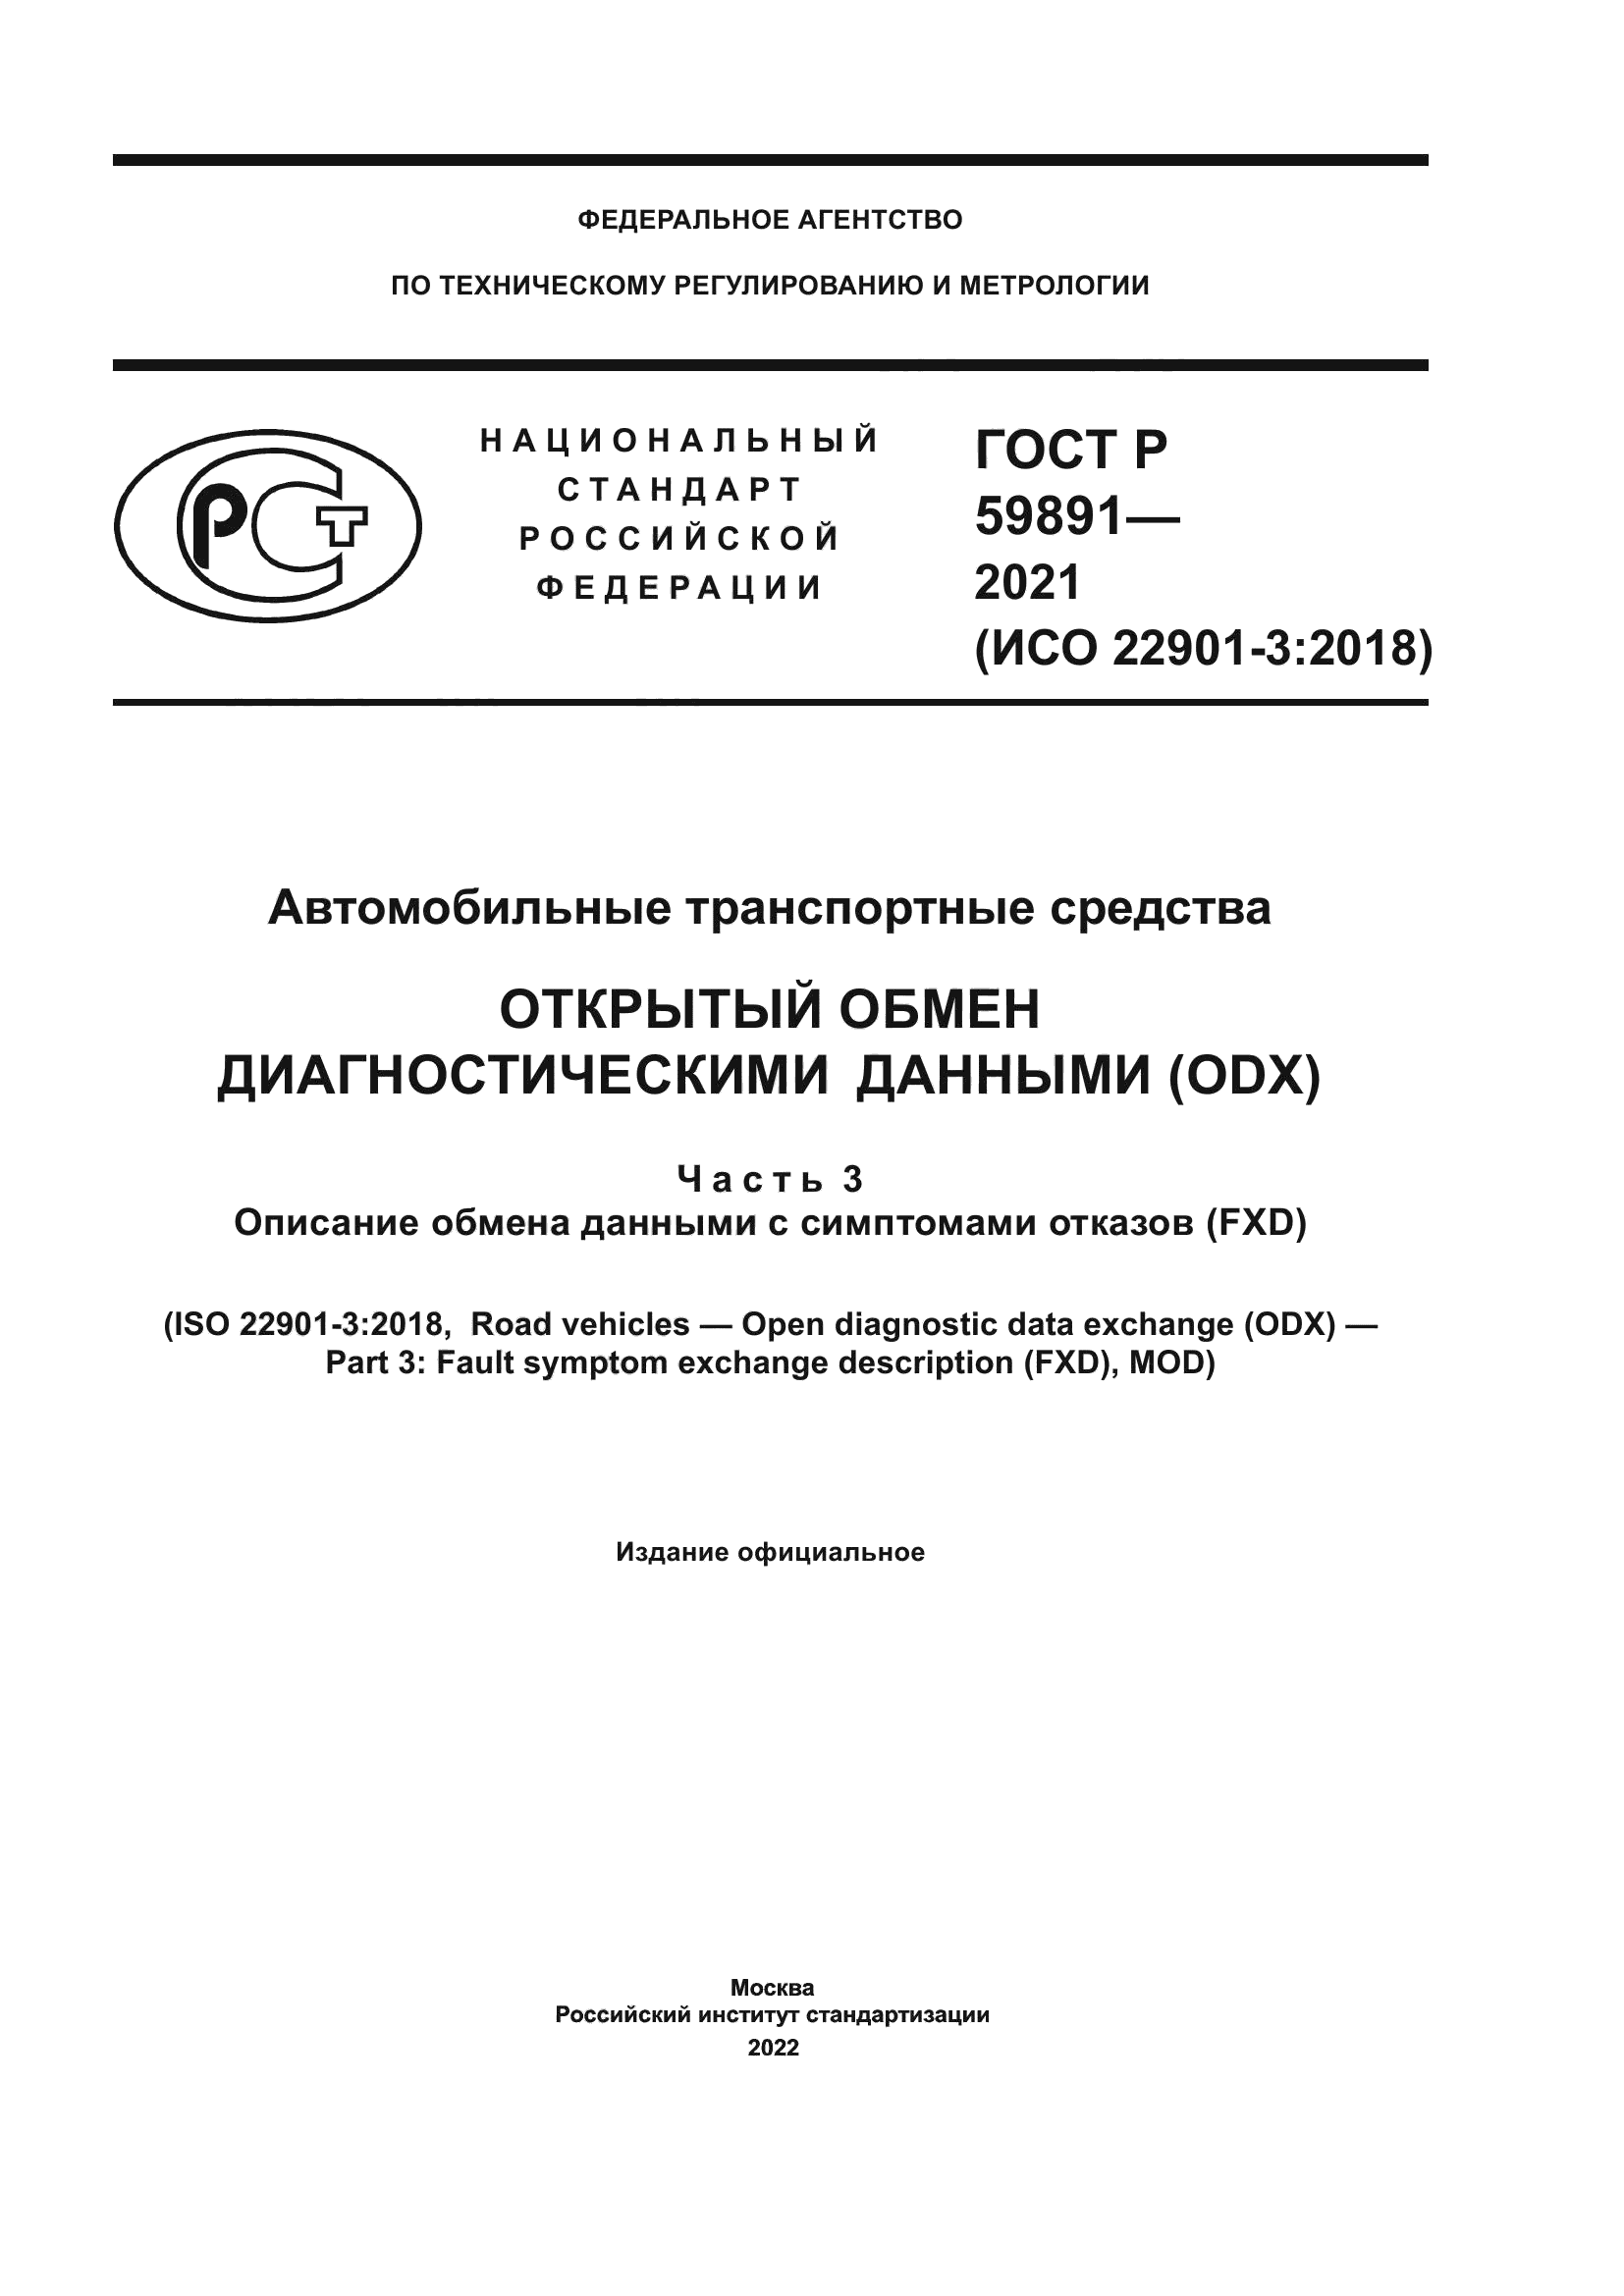 ГОСТ Р 59891-2021